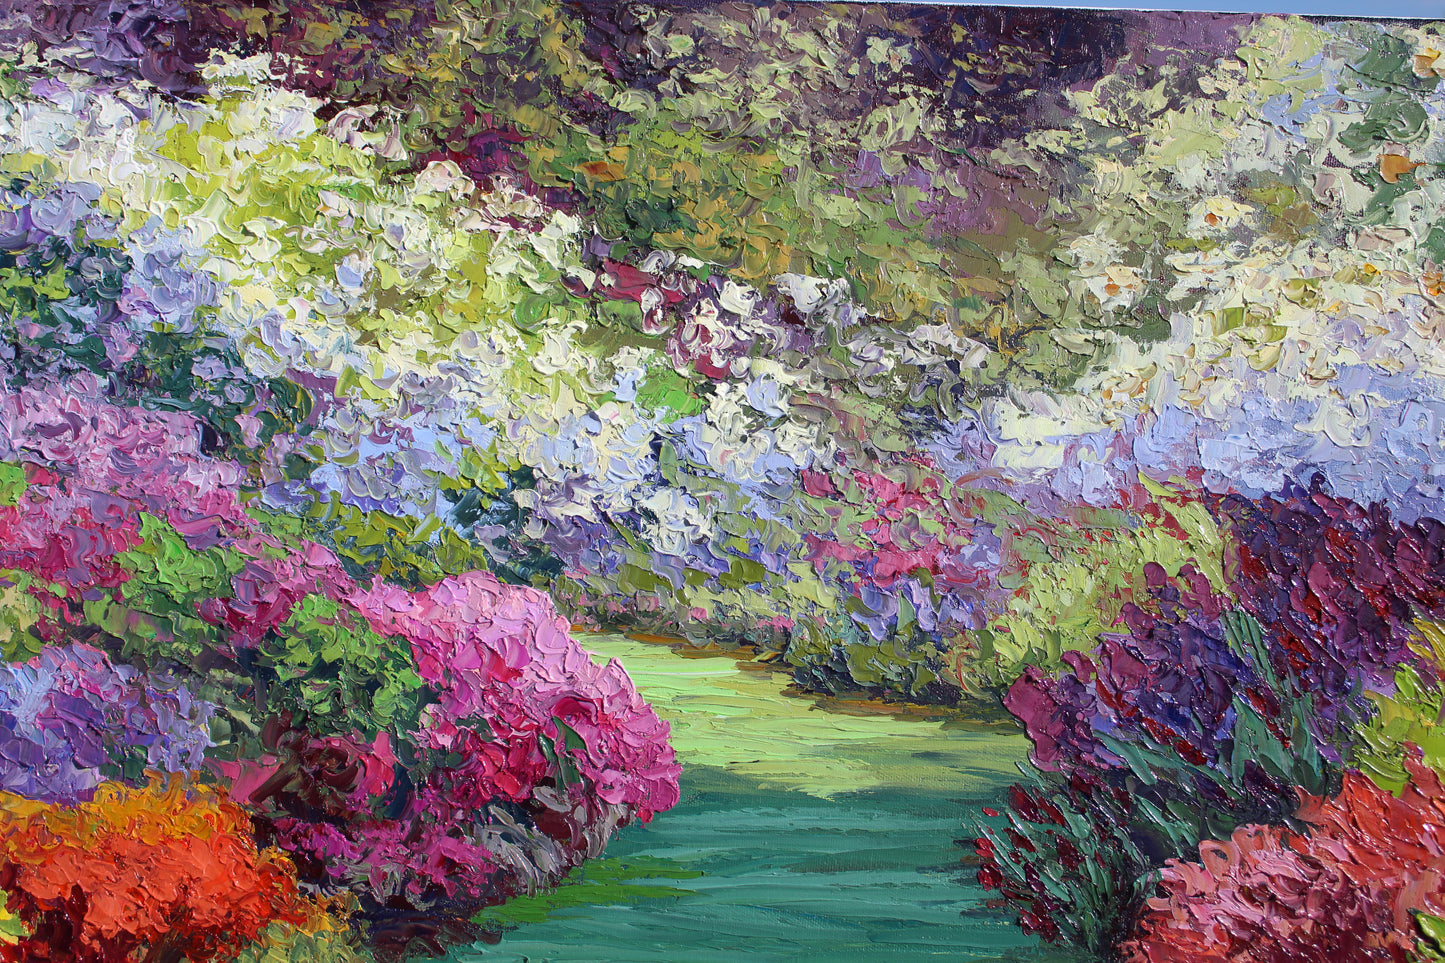 European Garden, Original 30" Square Oil On Canvas